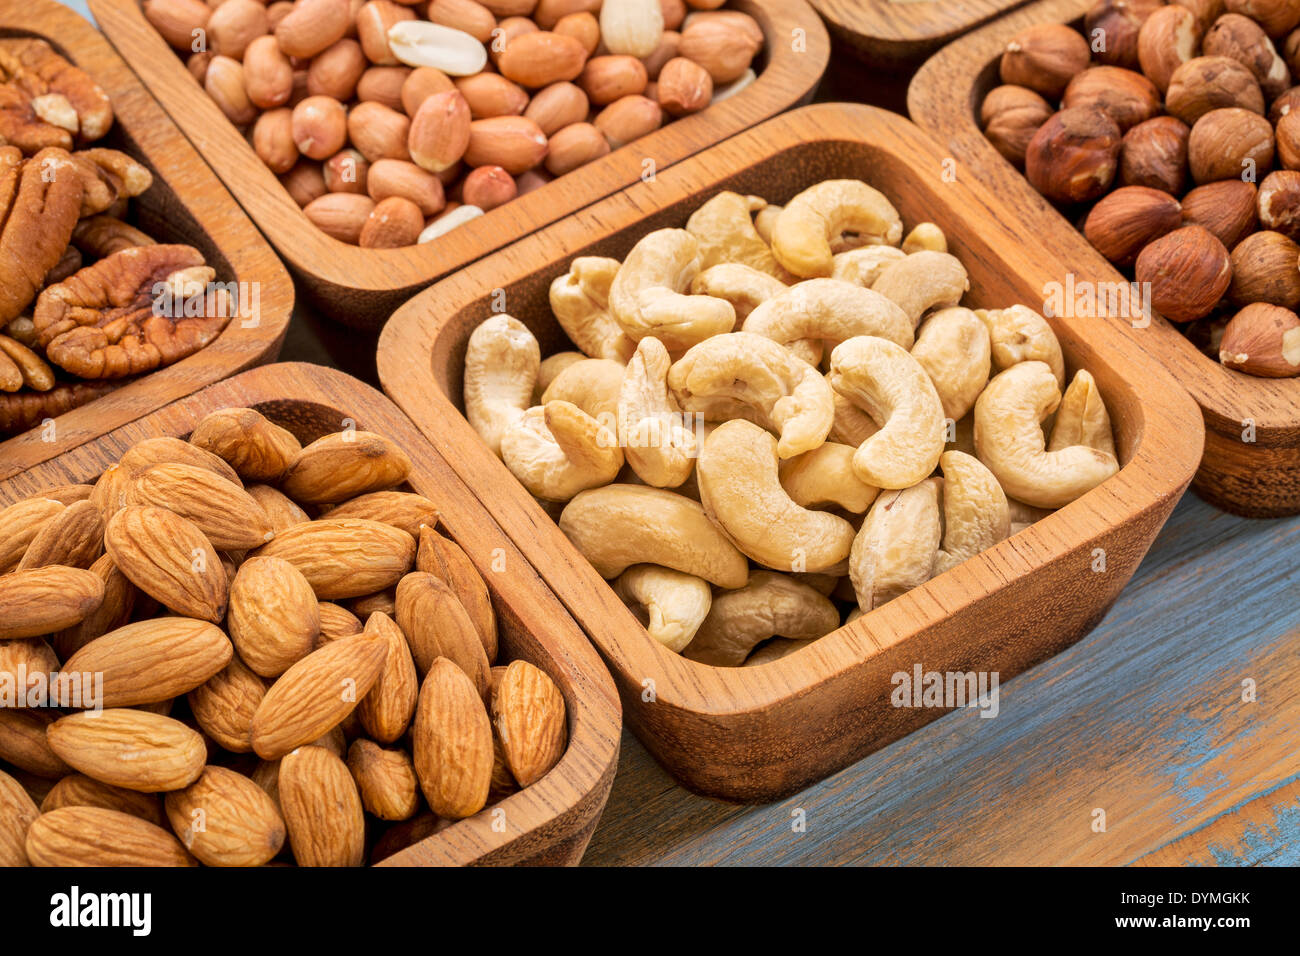 nuts abstract - cashew, pecan, hazelnut, Spanish peanut in wooden bowls Stock Photo